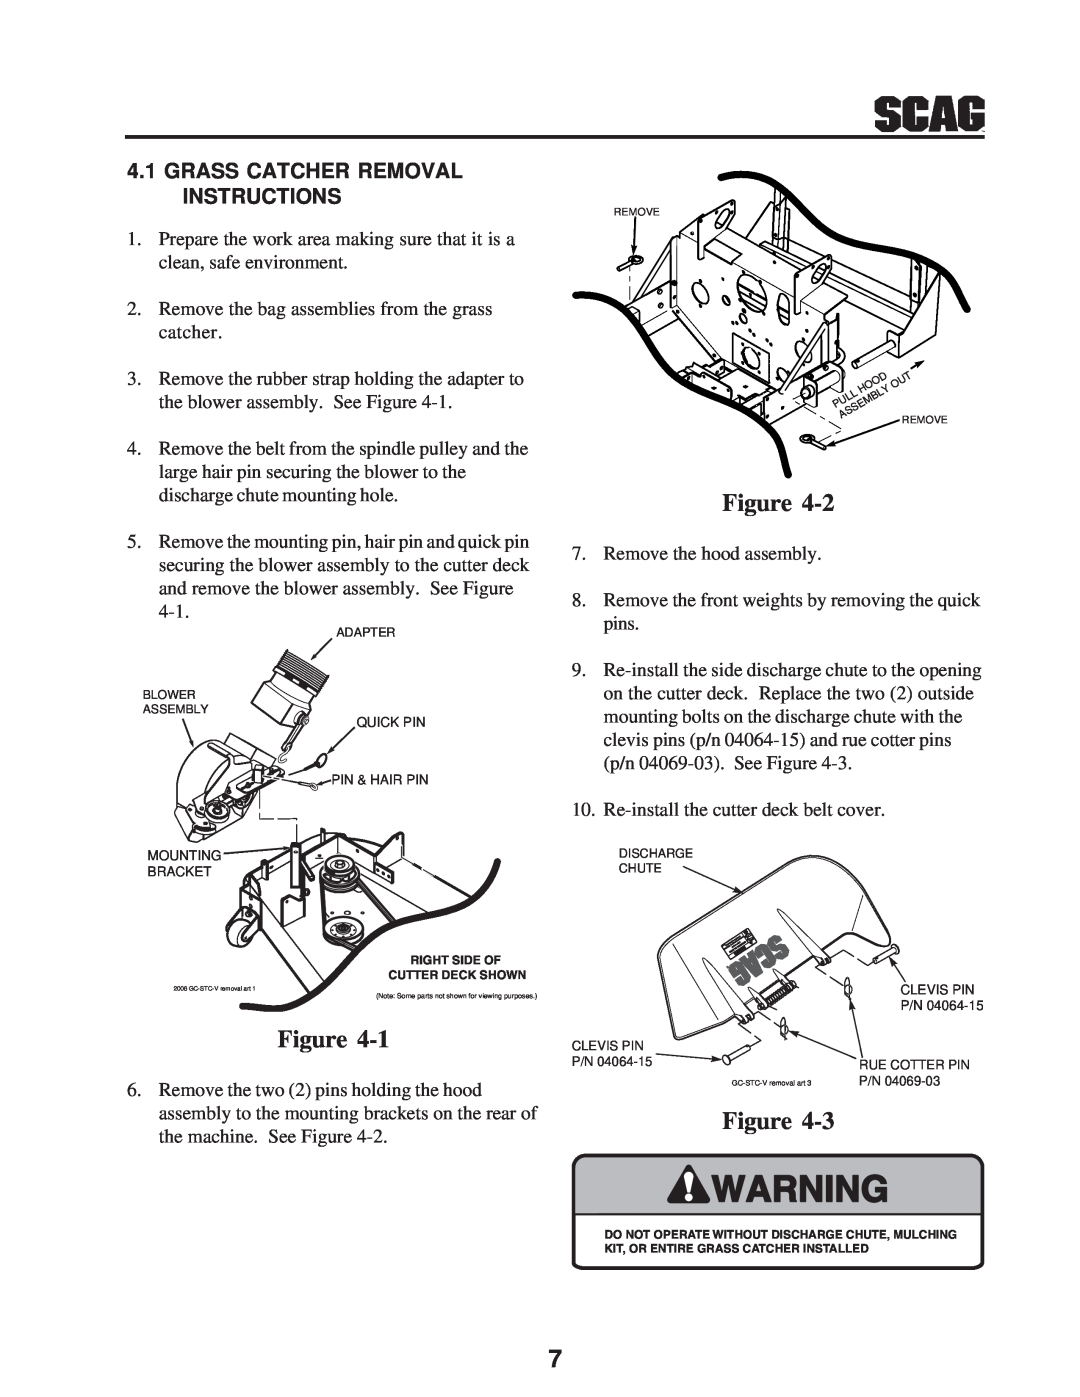 Scag Power Equipment GC-STT-V operating instructions Grass Catcher Removal Instructions 